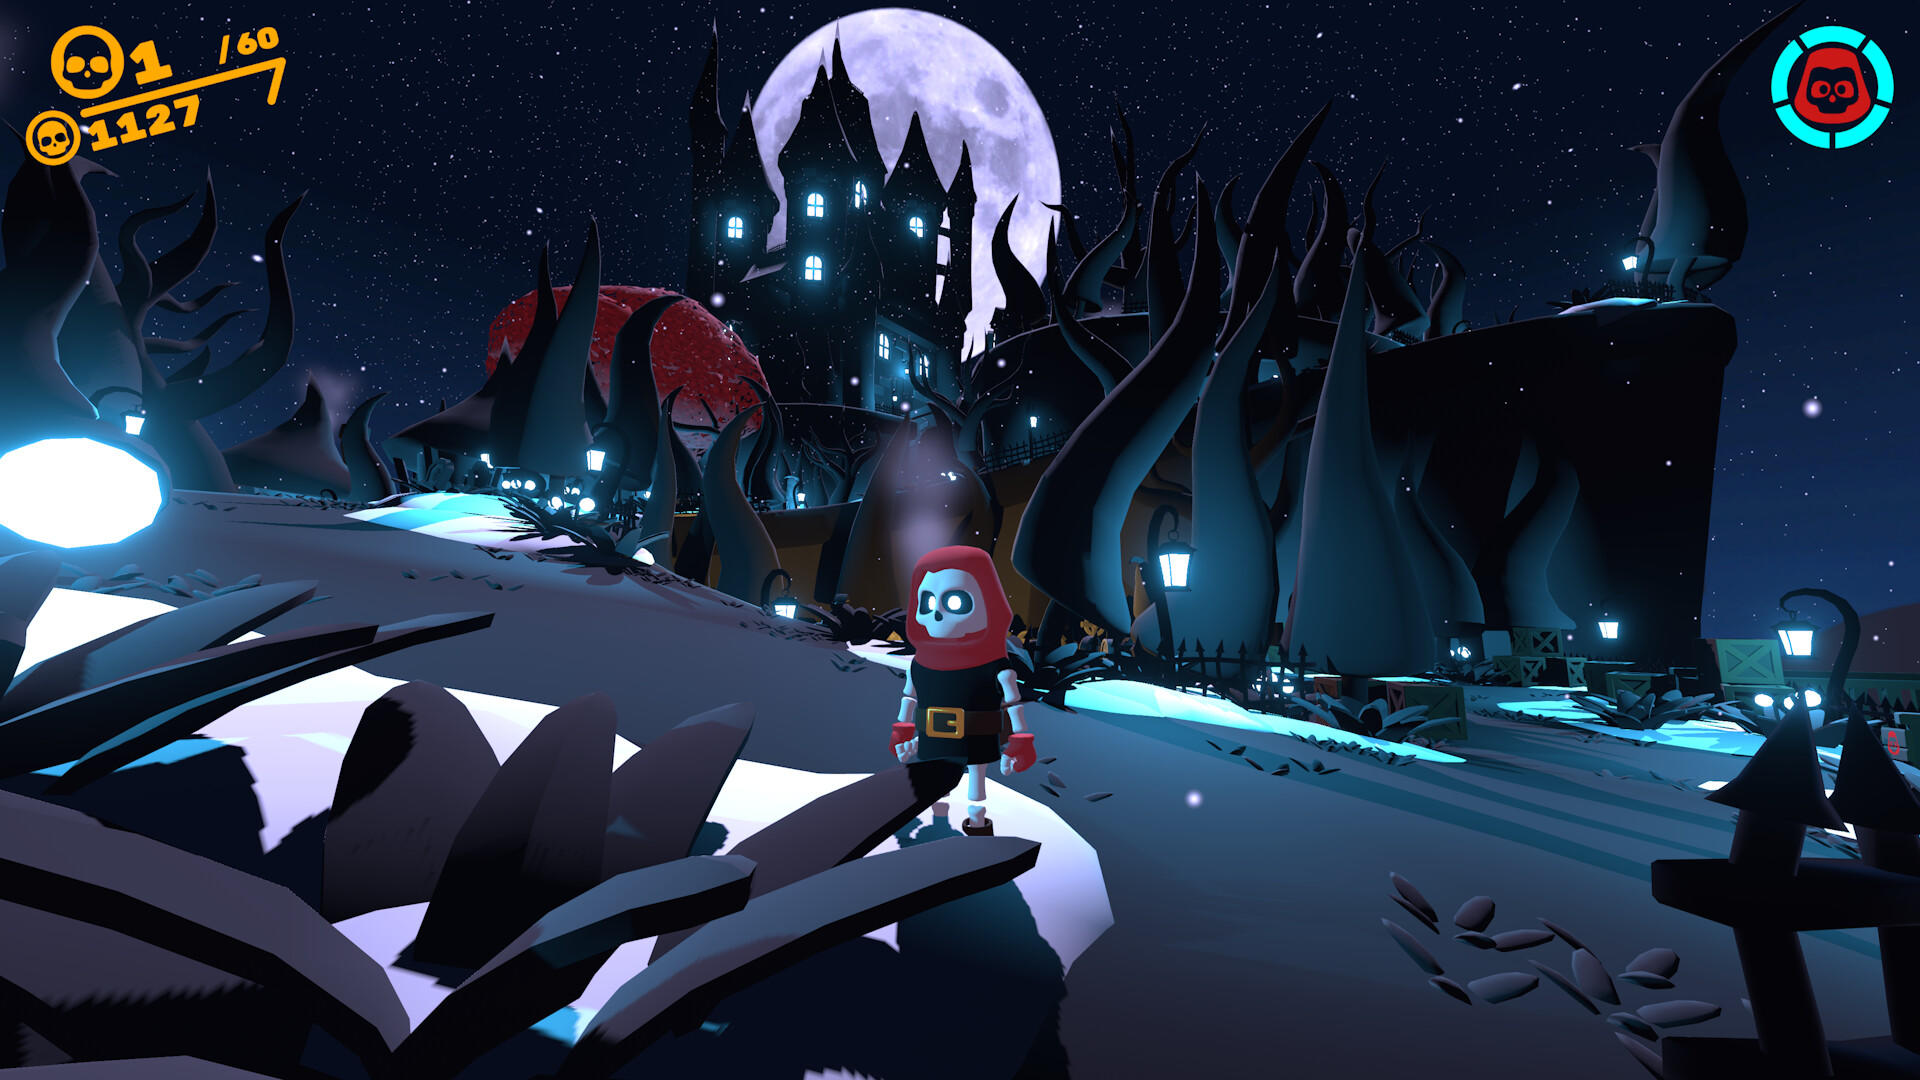 Skolly's Adventure screenshot game